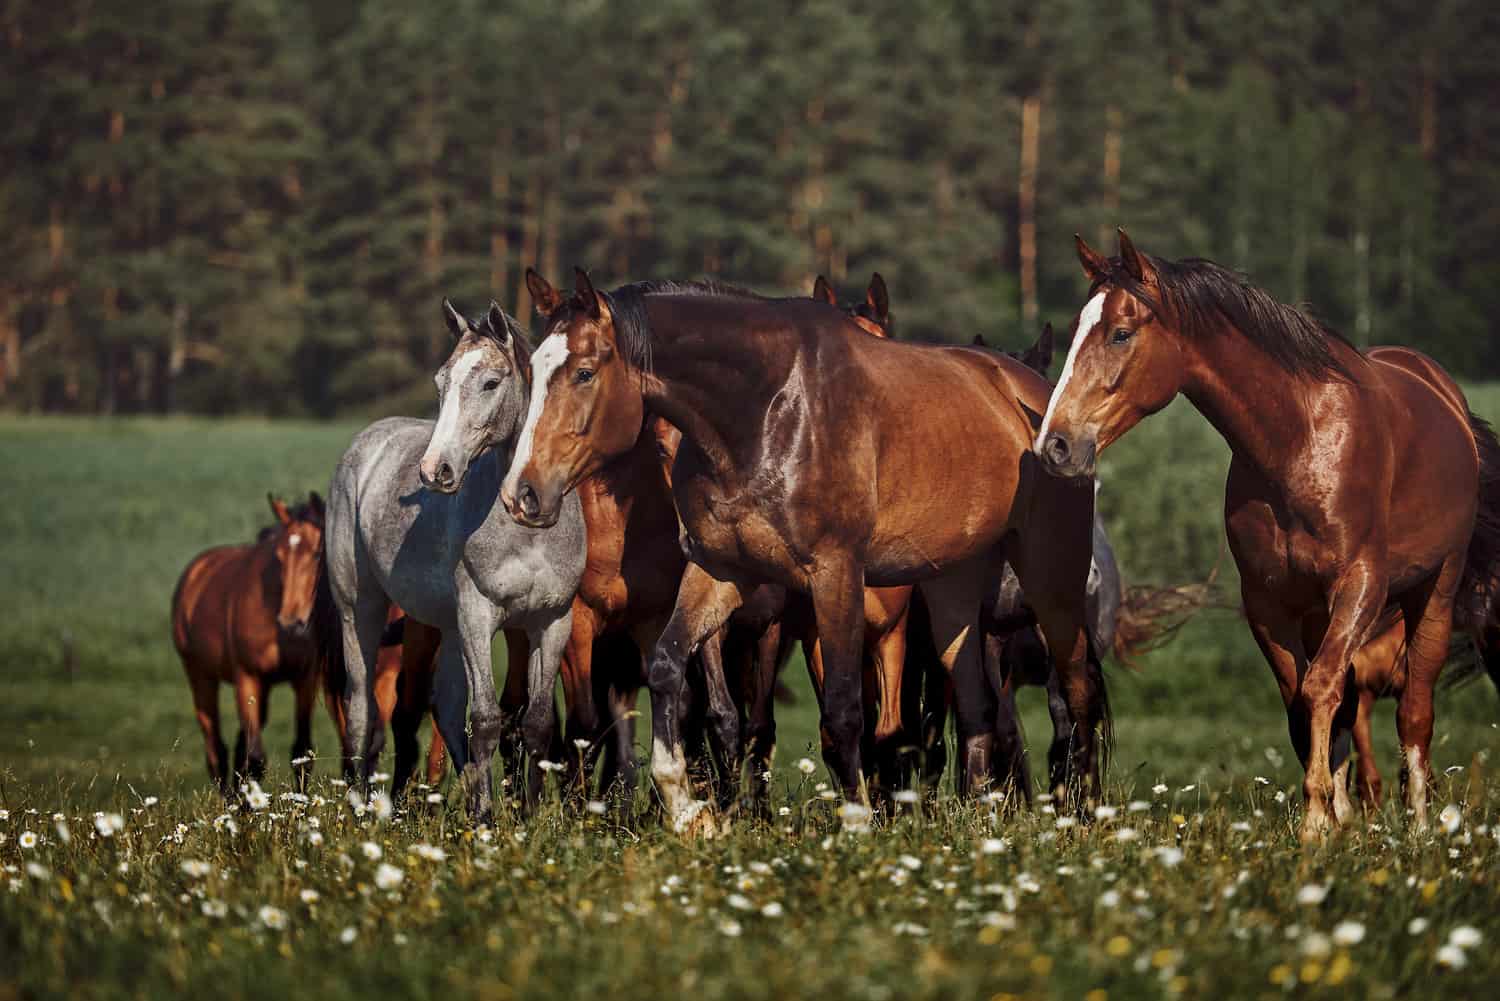 Horses as Symbols of Fun and Play